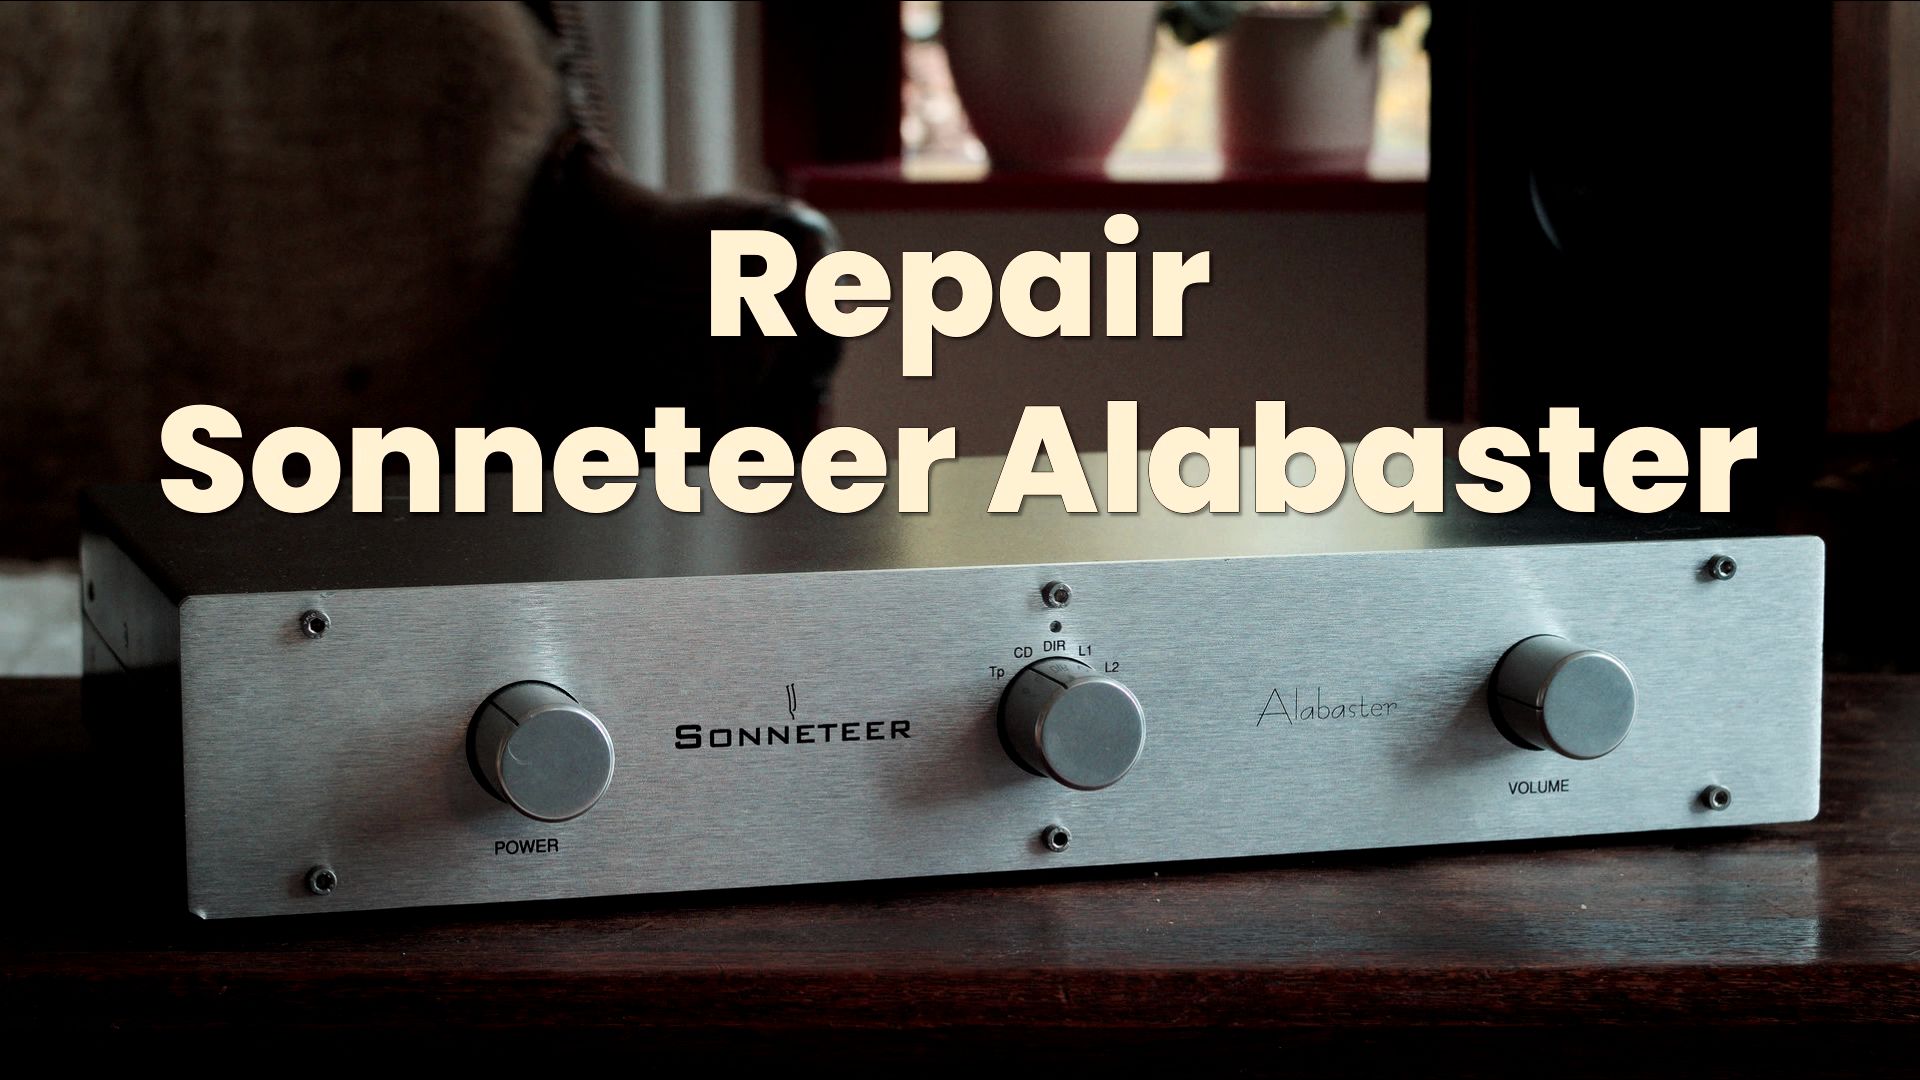 Repairing a Sonneteer Alabaster audio amplifier